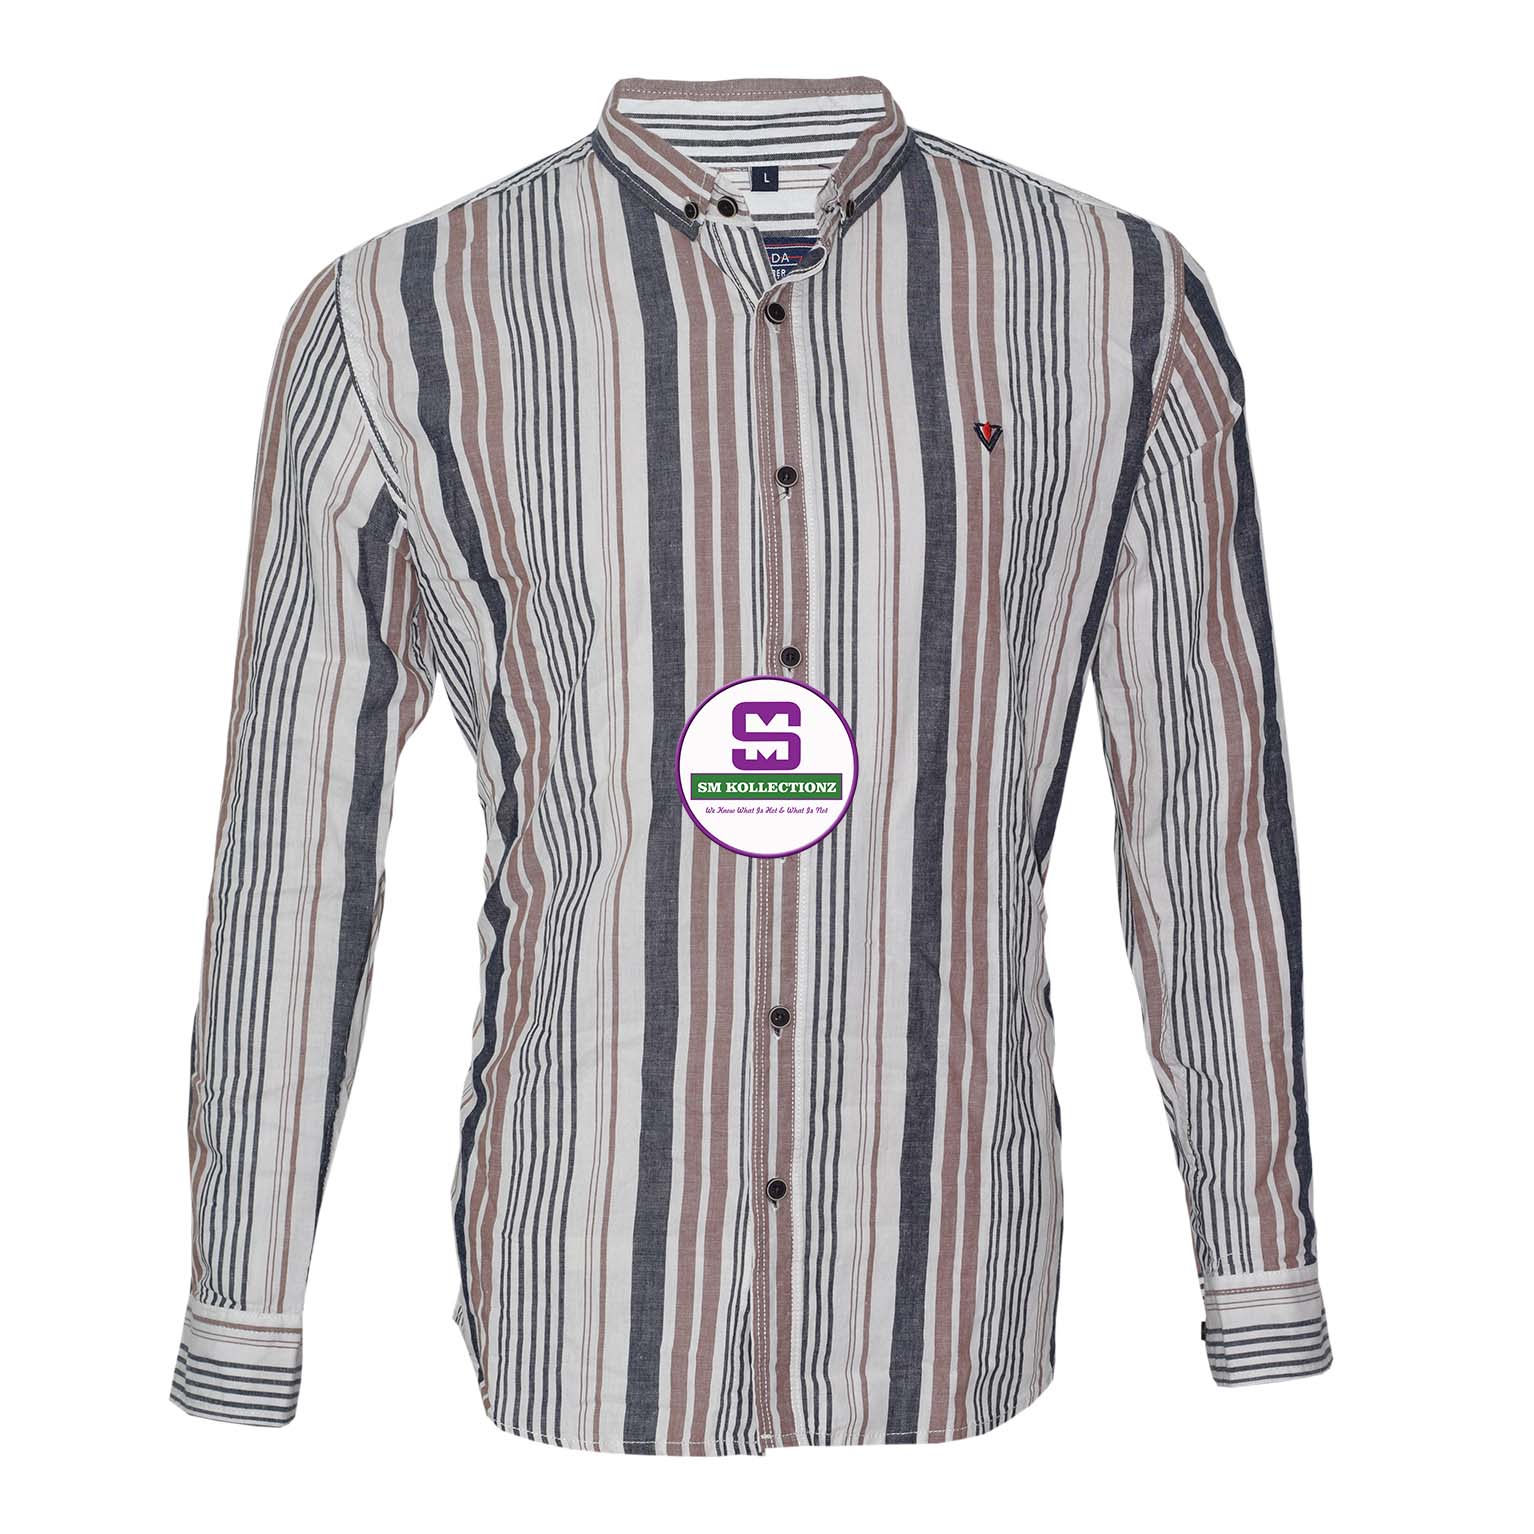 Men's Striped Shirts Online In Kenya